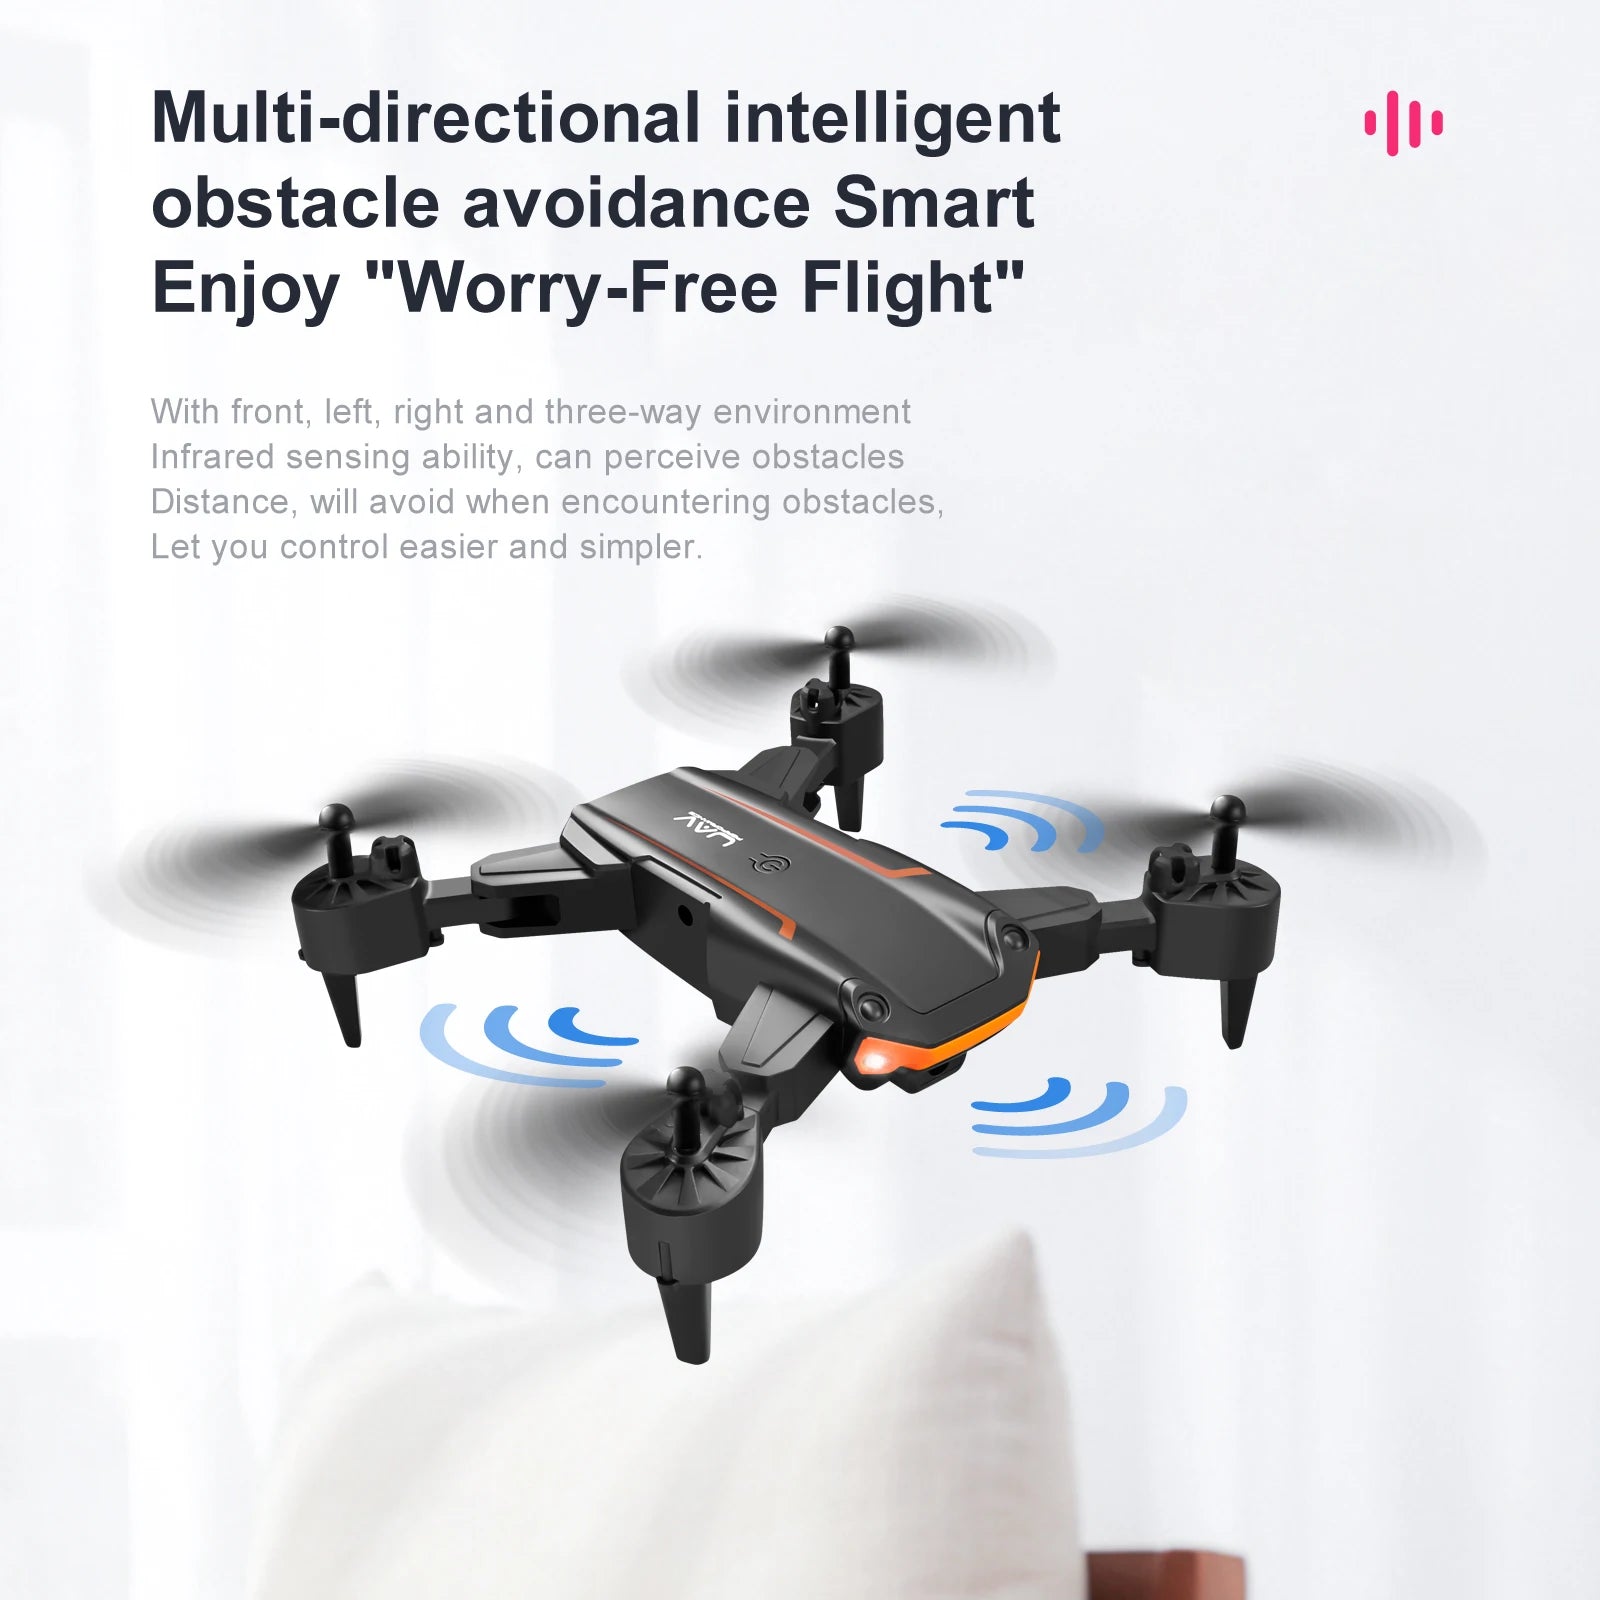 XYRC New KY603 Mini Drone, intelligent obstacle avoidance smart enjoy "worry-free flight"